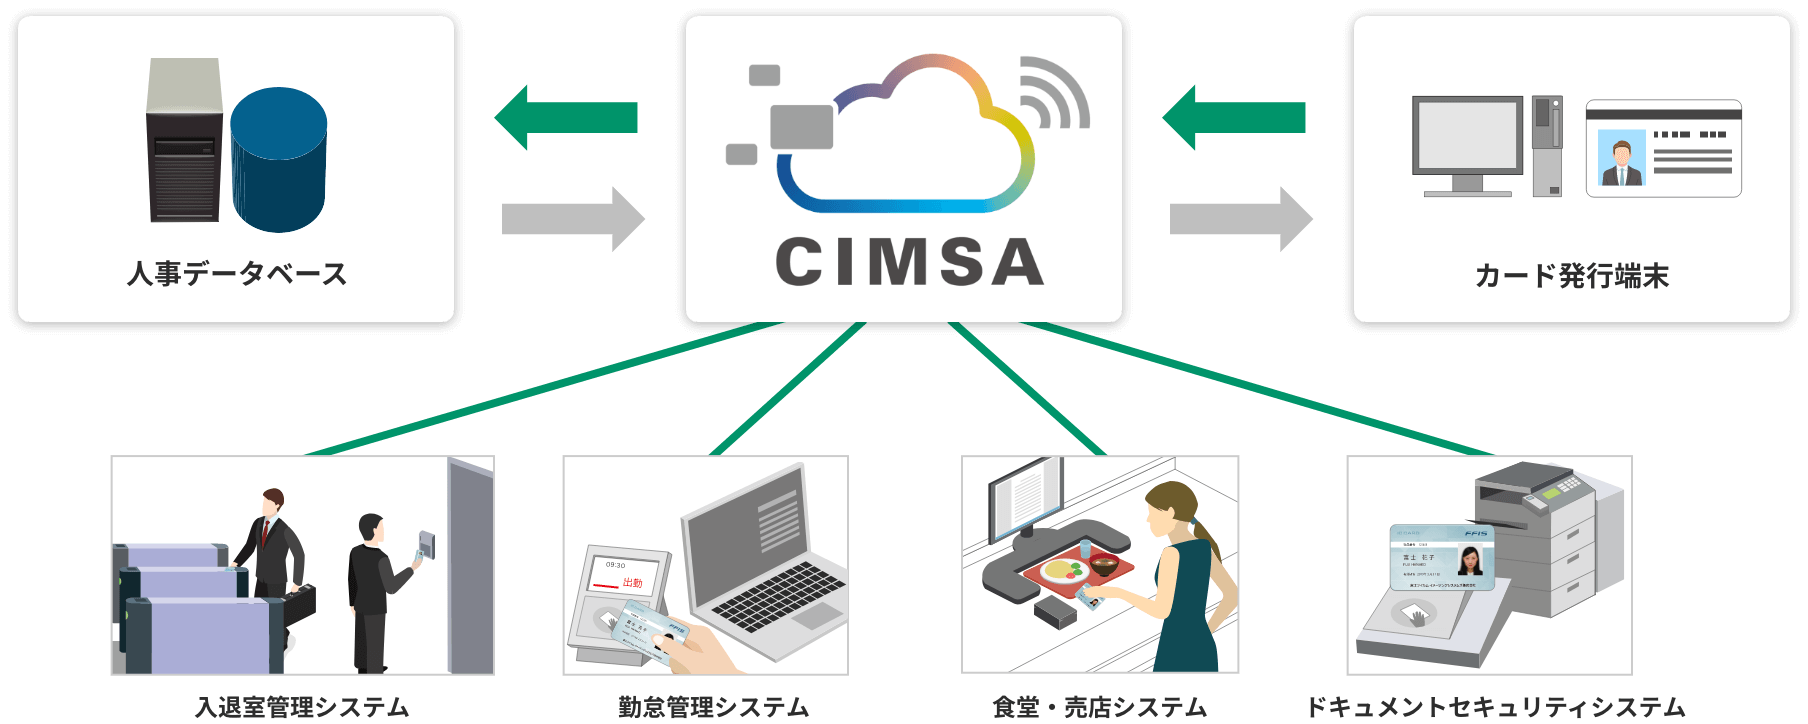 CIMSAを利用したカード情報変換のイメージ図